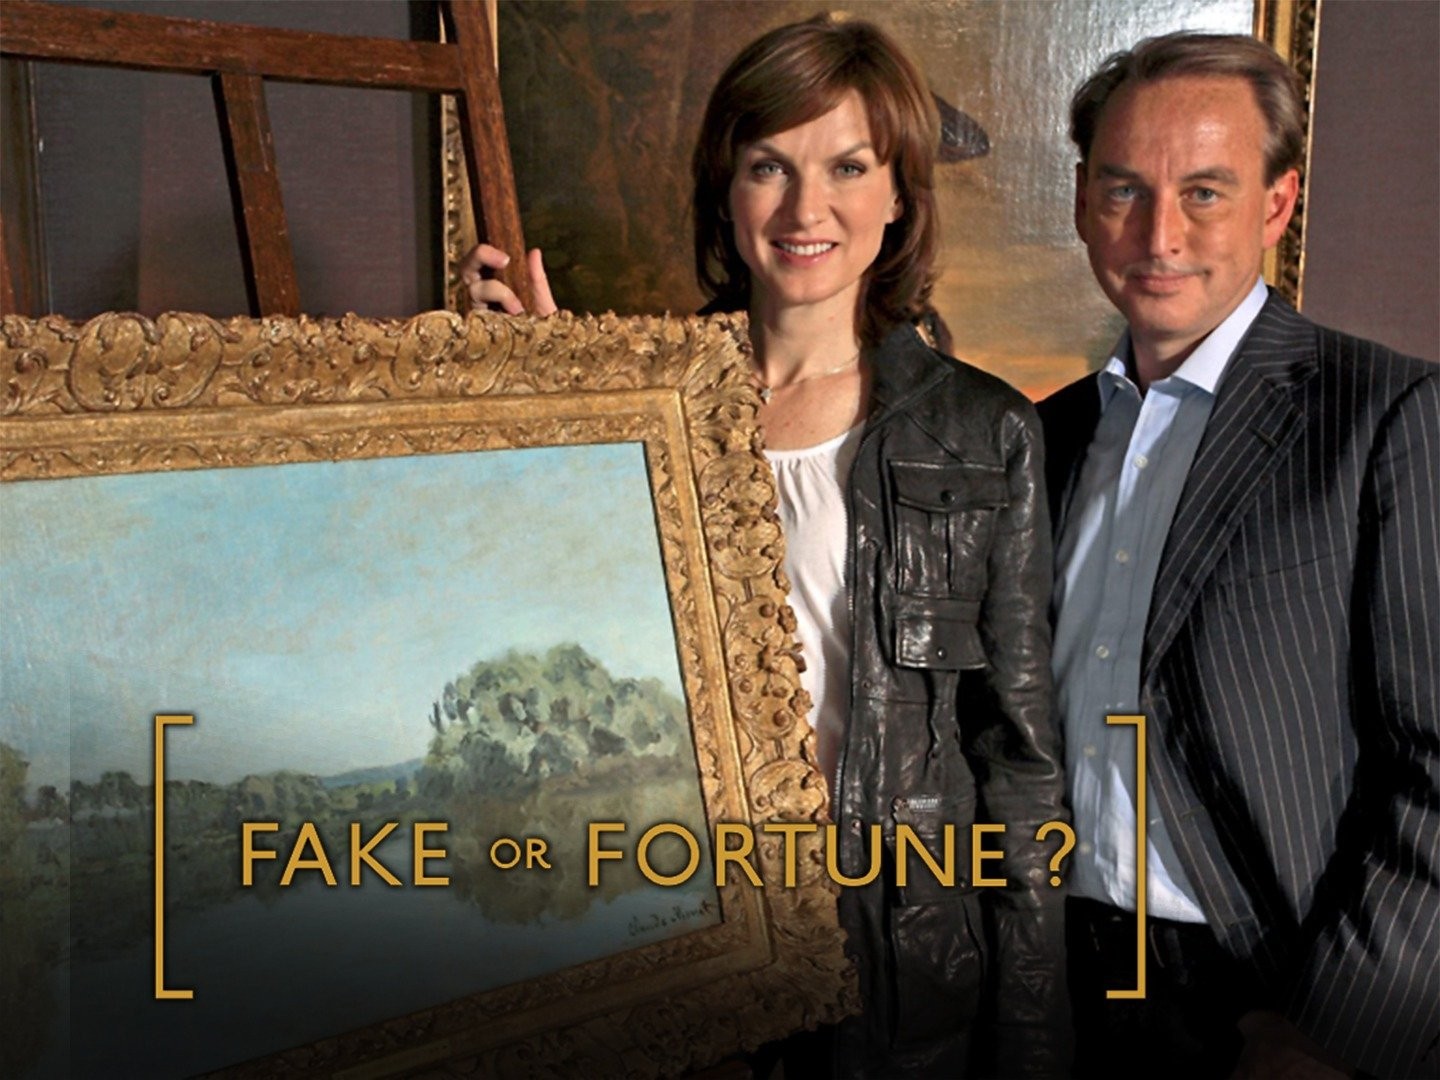 Fake or Fortune? returns next week!